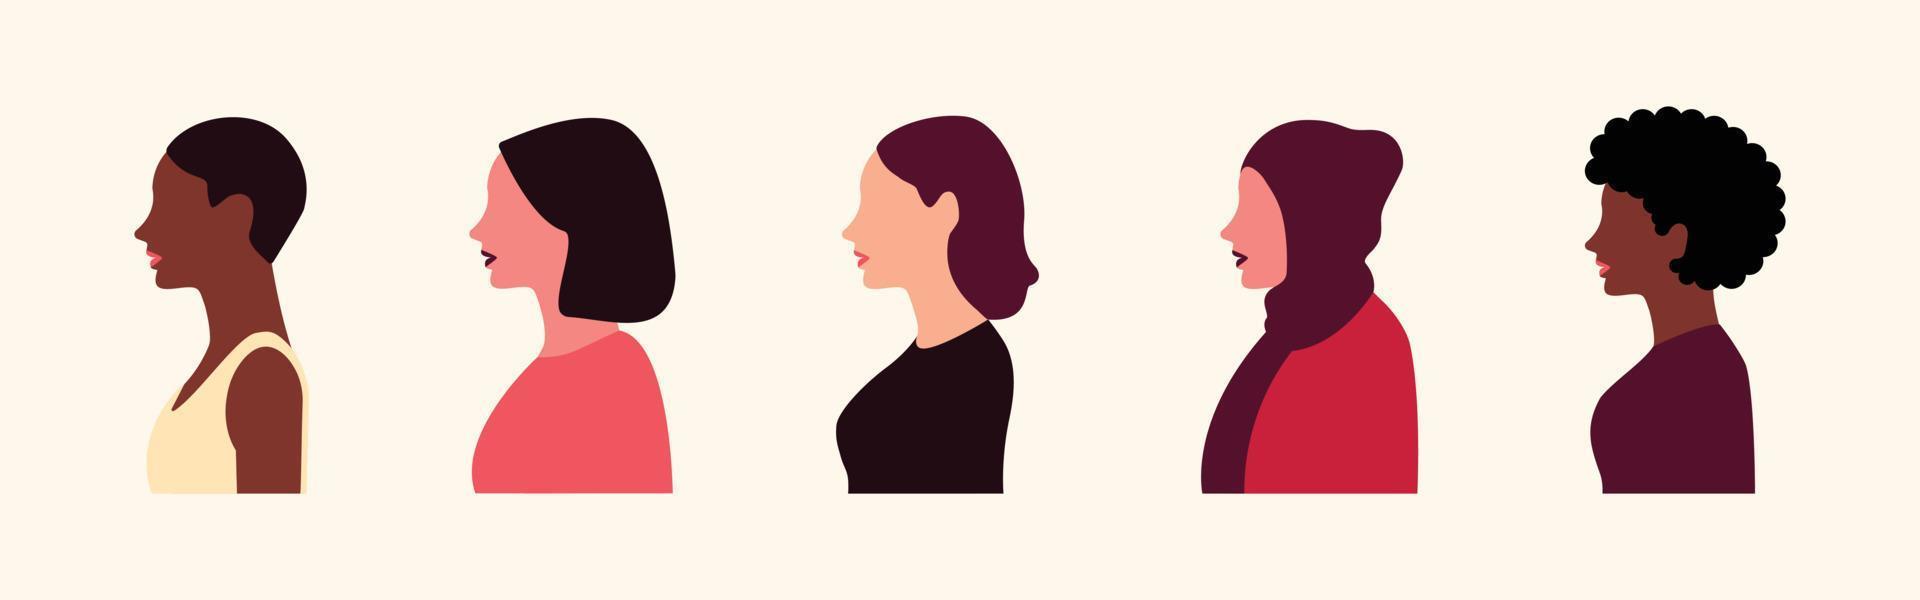 set of diversity of woman in flat design vector